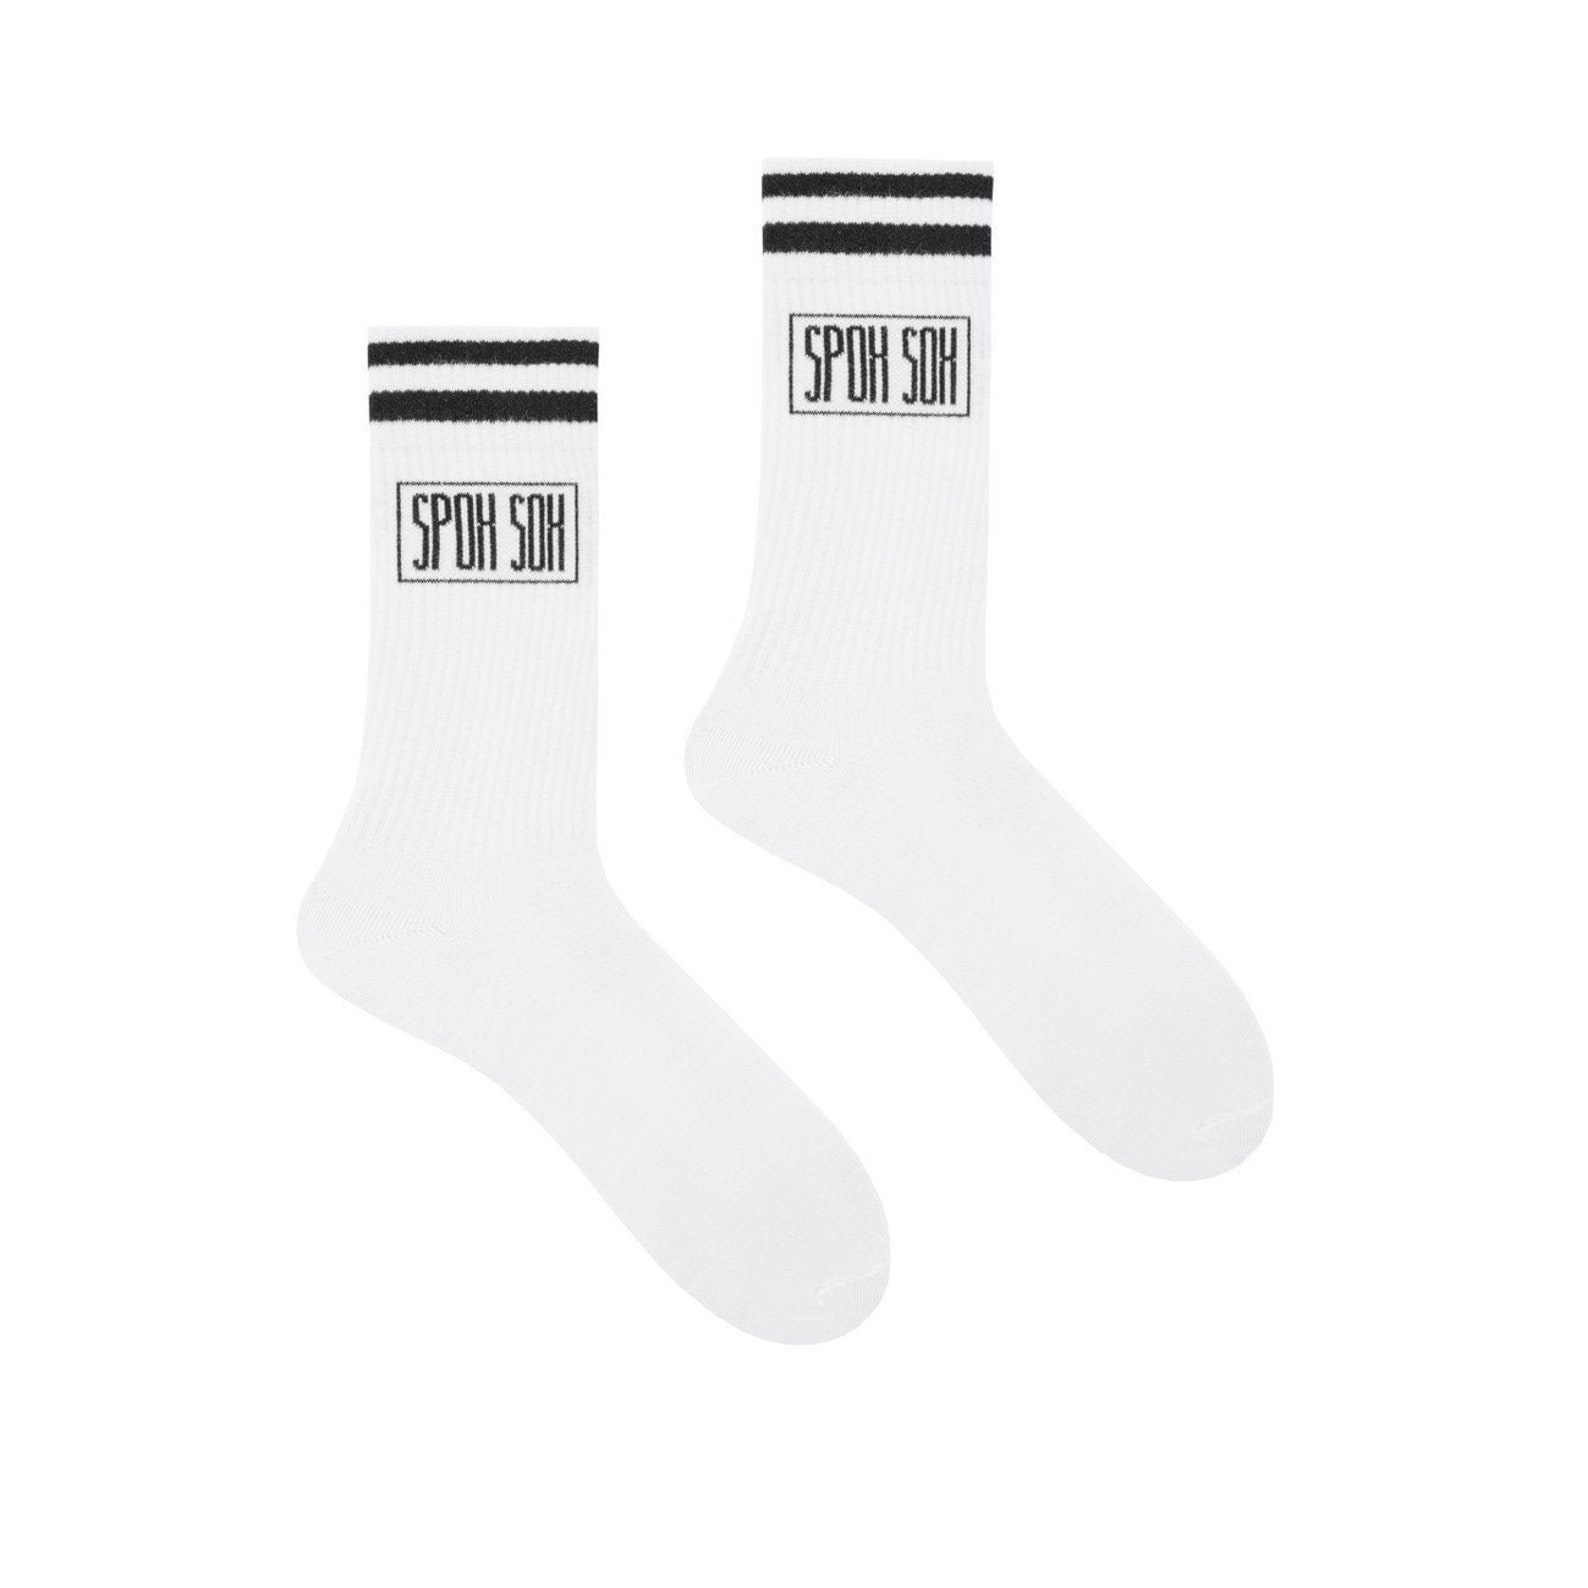 Streetwear crew white socks workout socks gym socks | Etsy